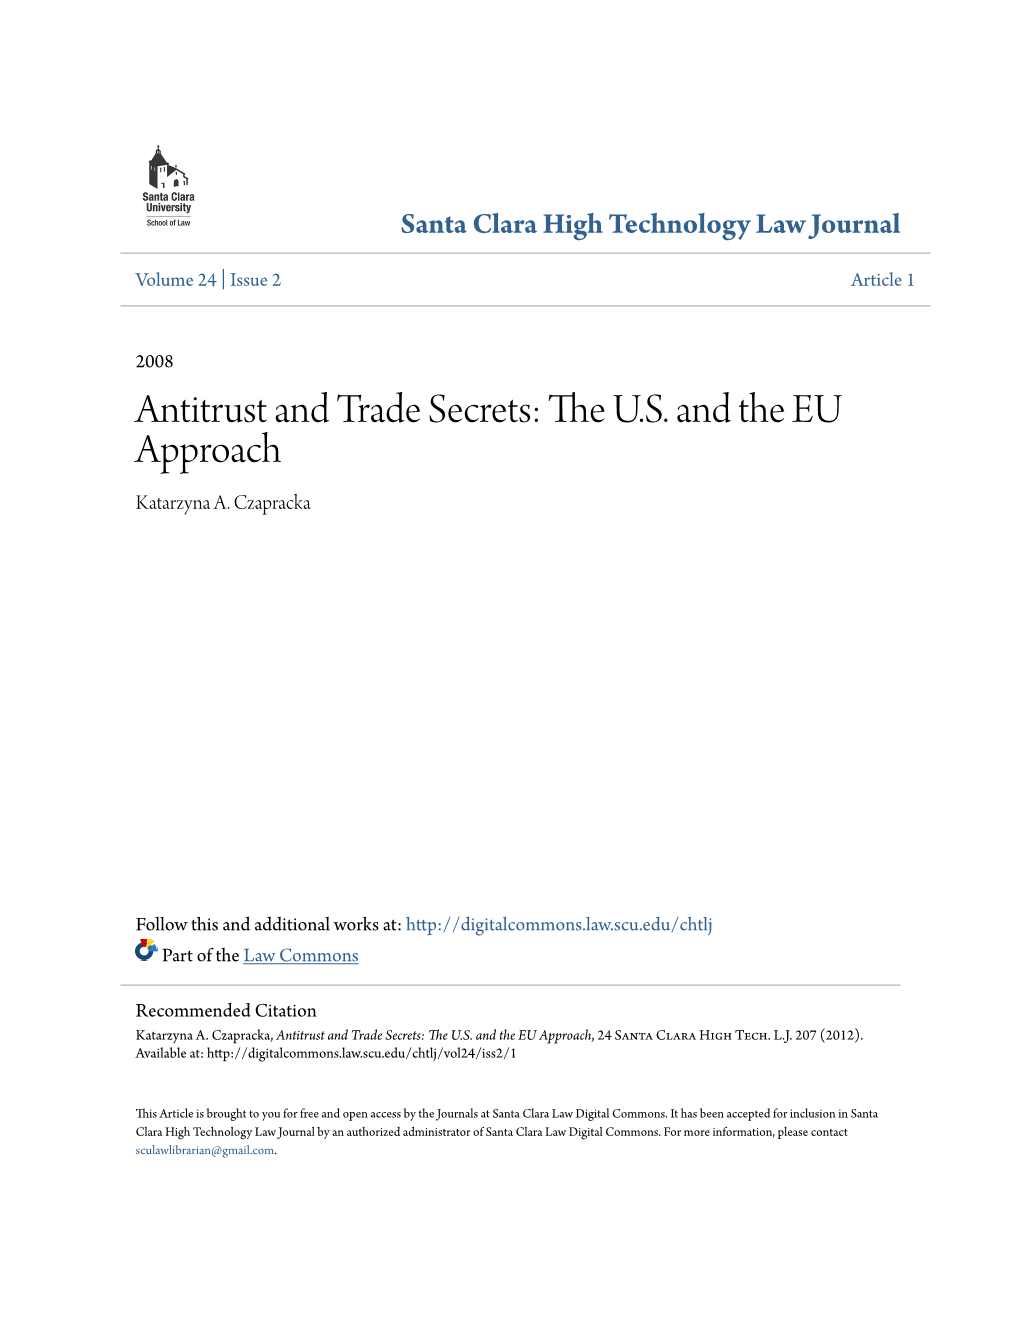 Antitrust and Trade Secrets: the U.S. and the EU Approach, 24 Santa Clara High Tech